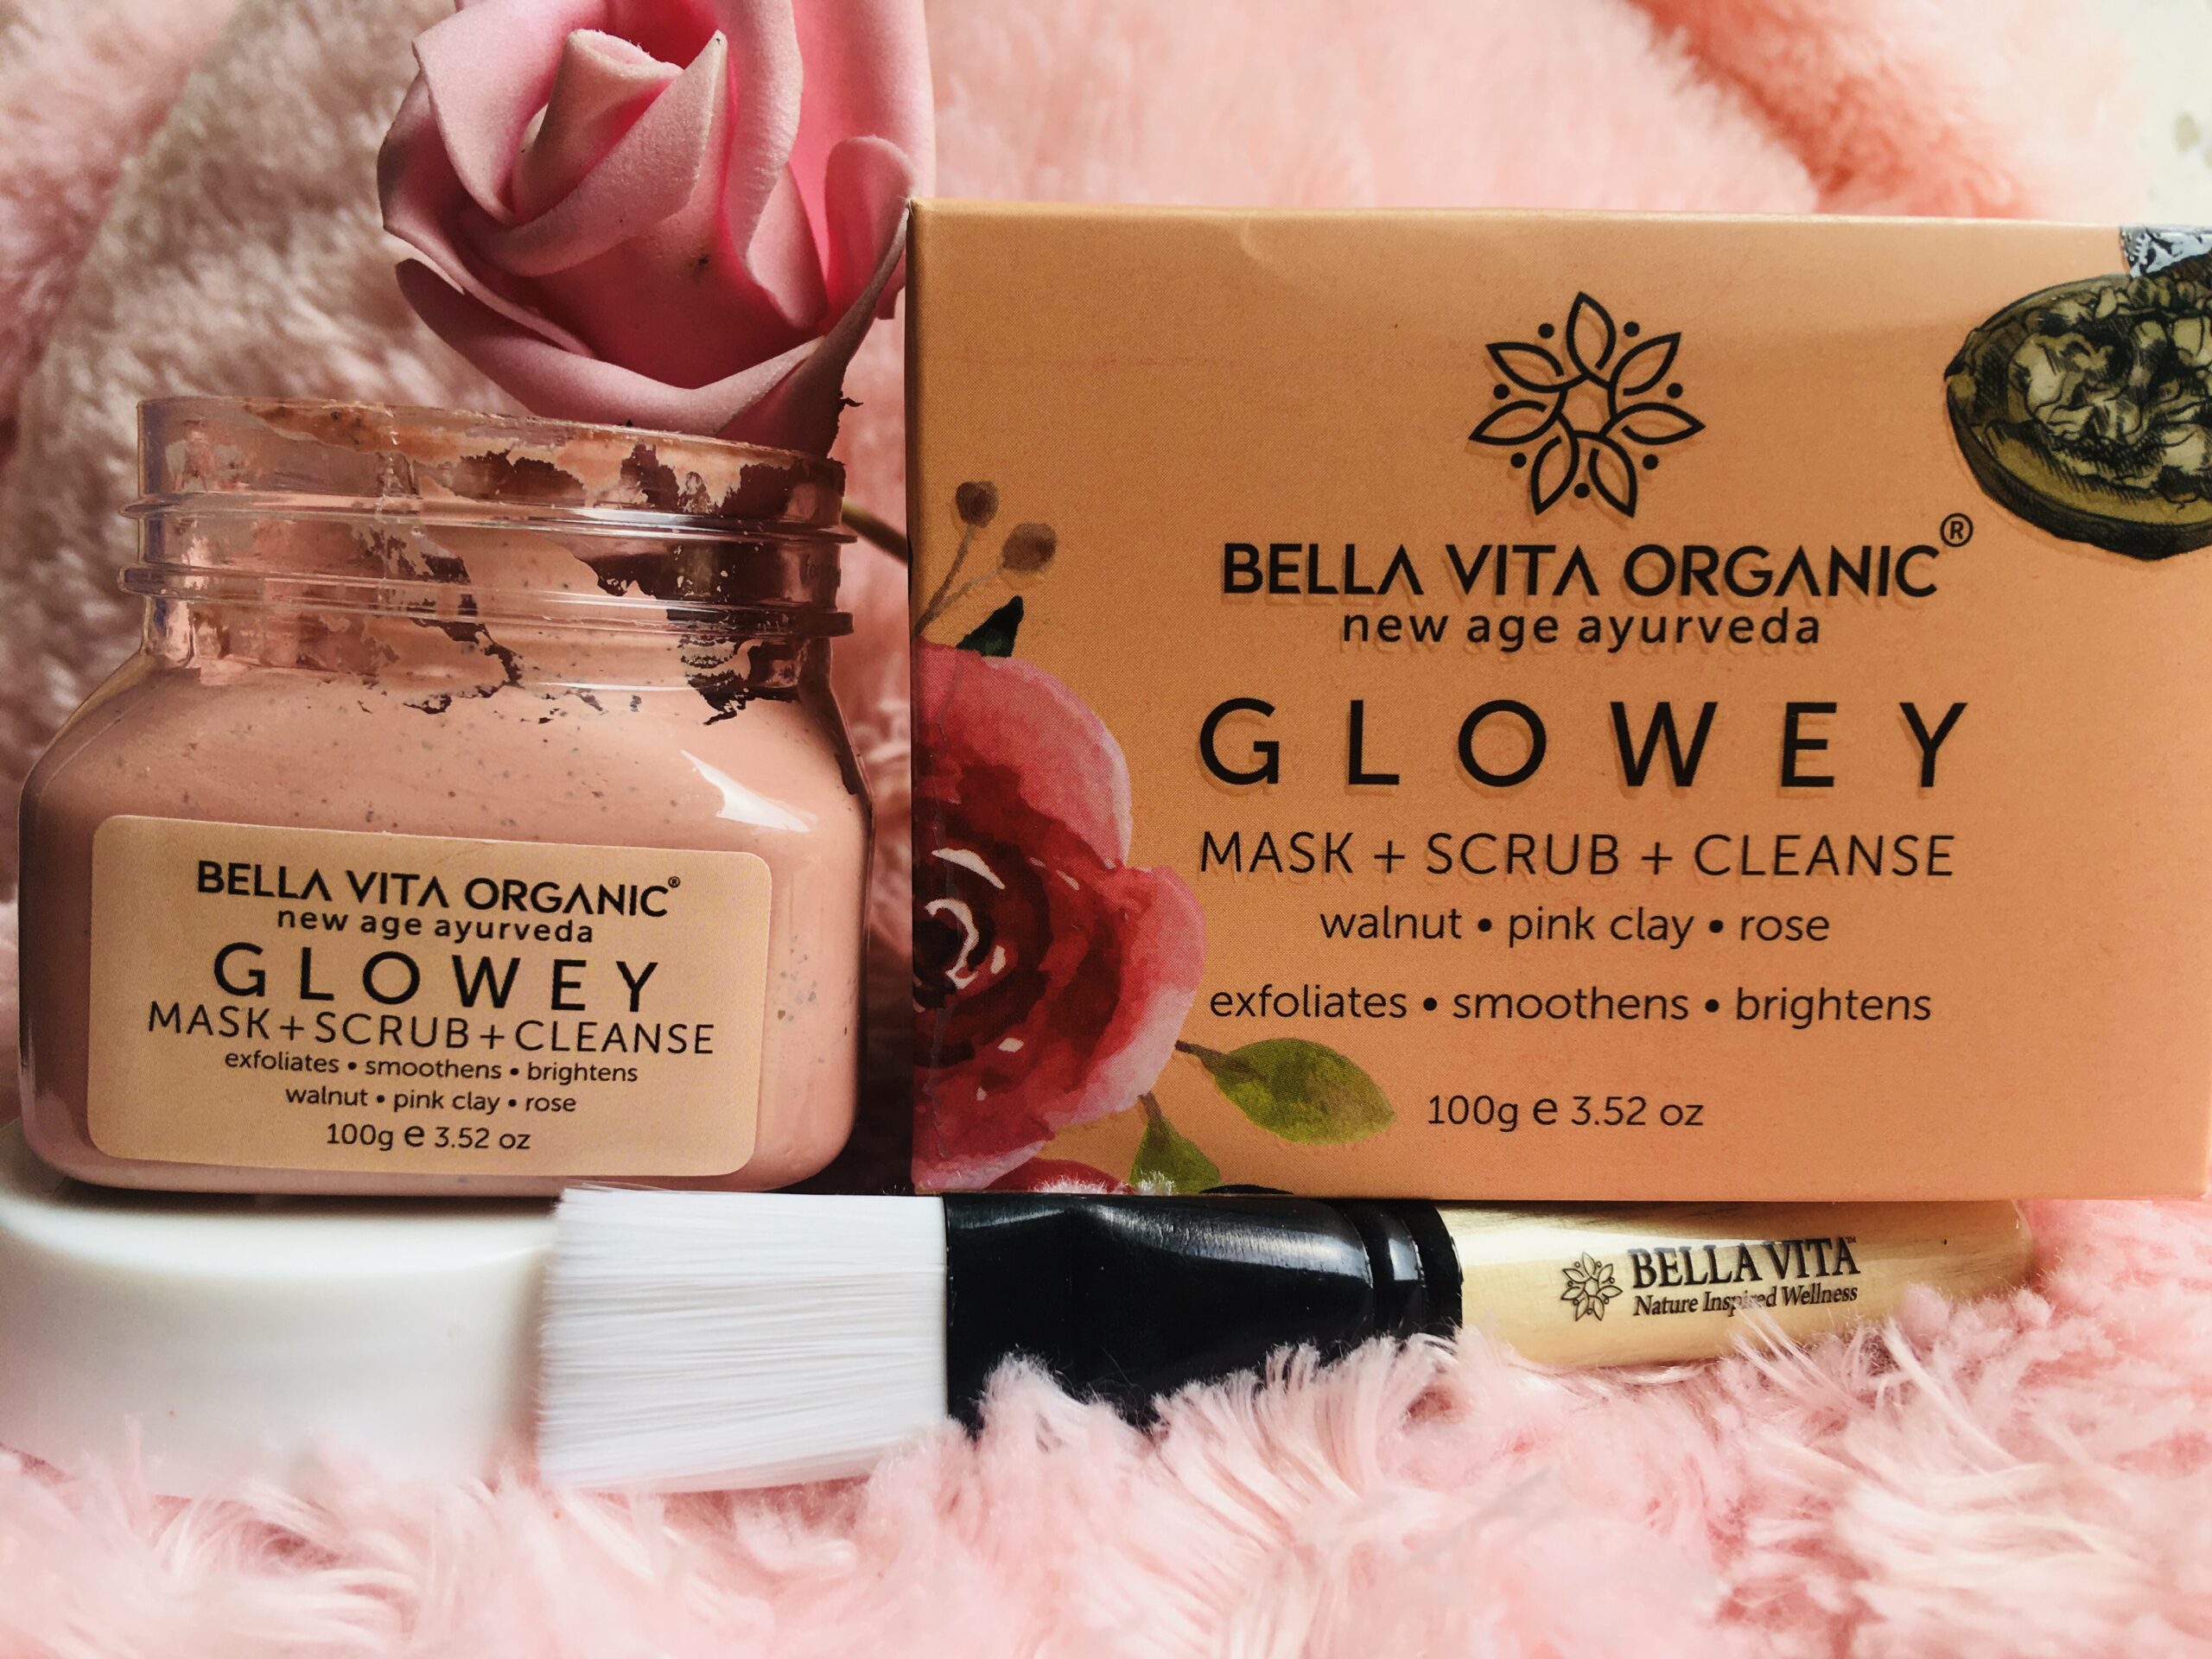 Bella Vita Glowey Mask+Scrub+Cleanse Review